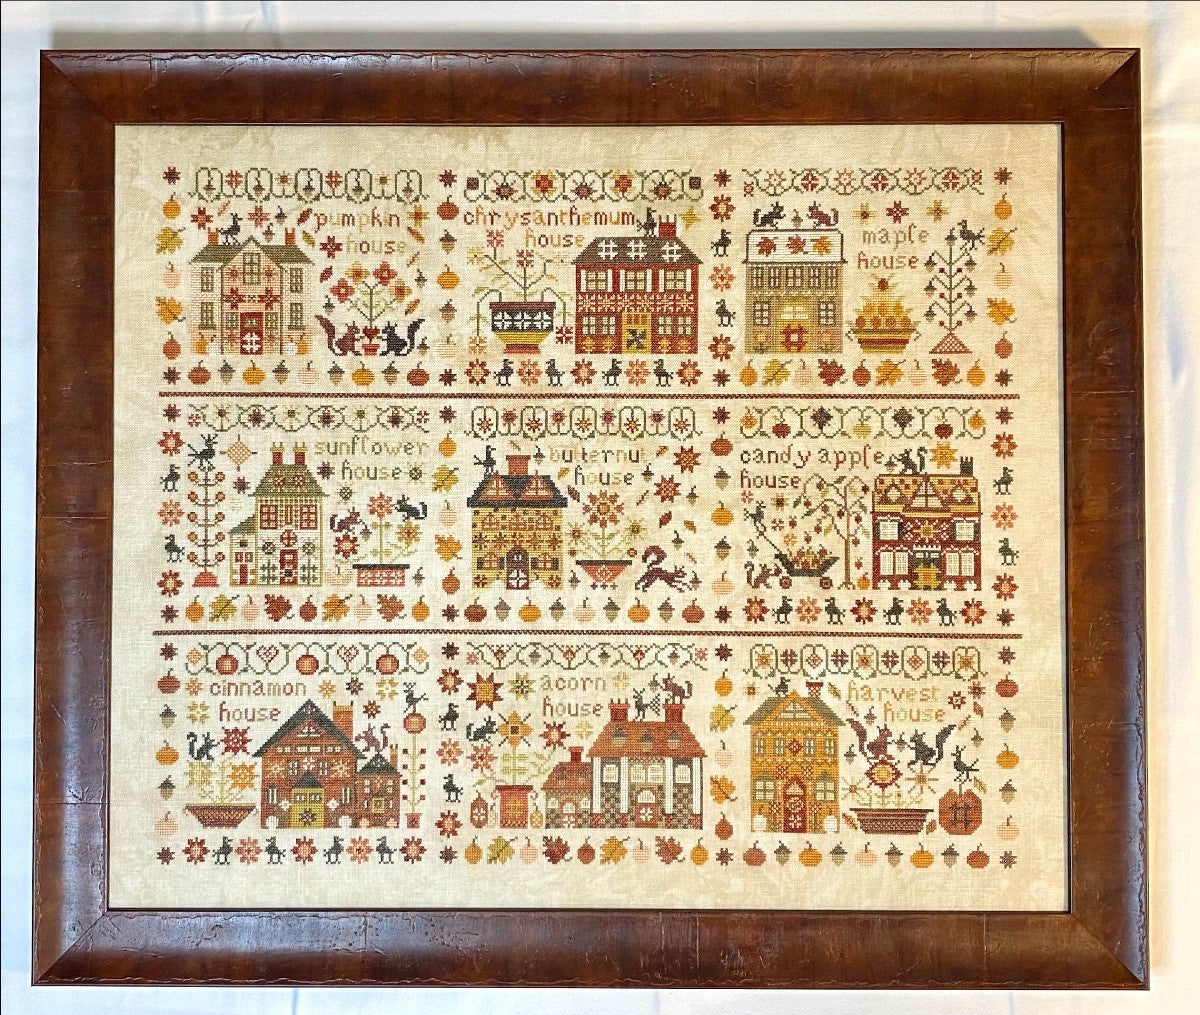 Cinnamon House - Cross stitch pattern by Pansy Patch